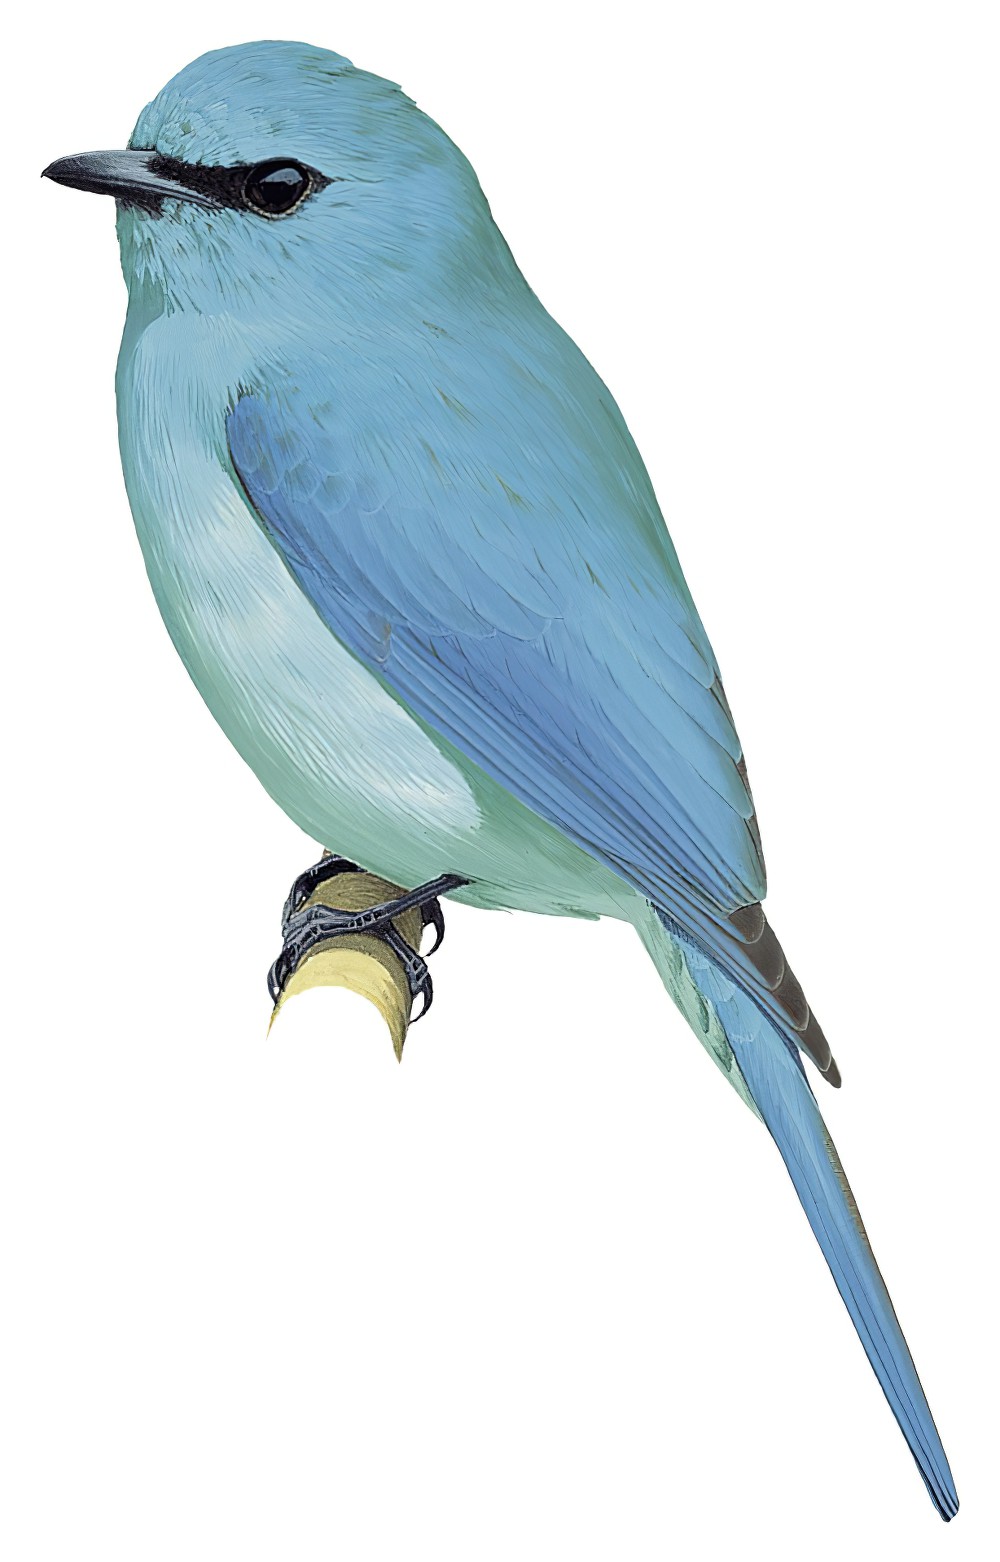 Verditer Flycatcher / Eumyias thalassinus